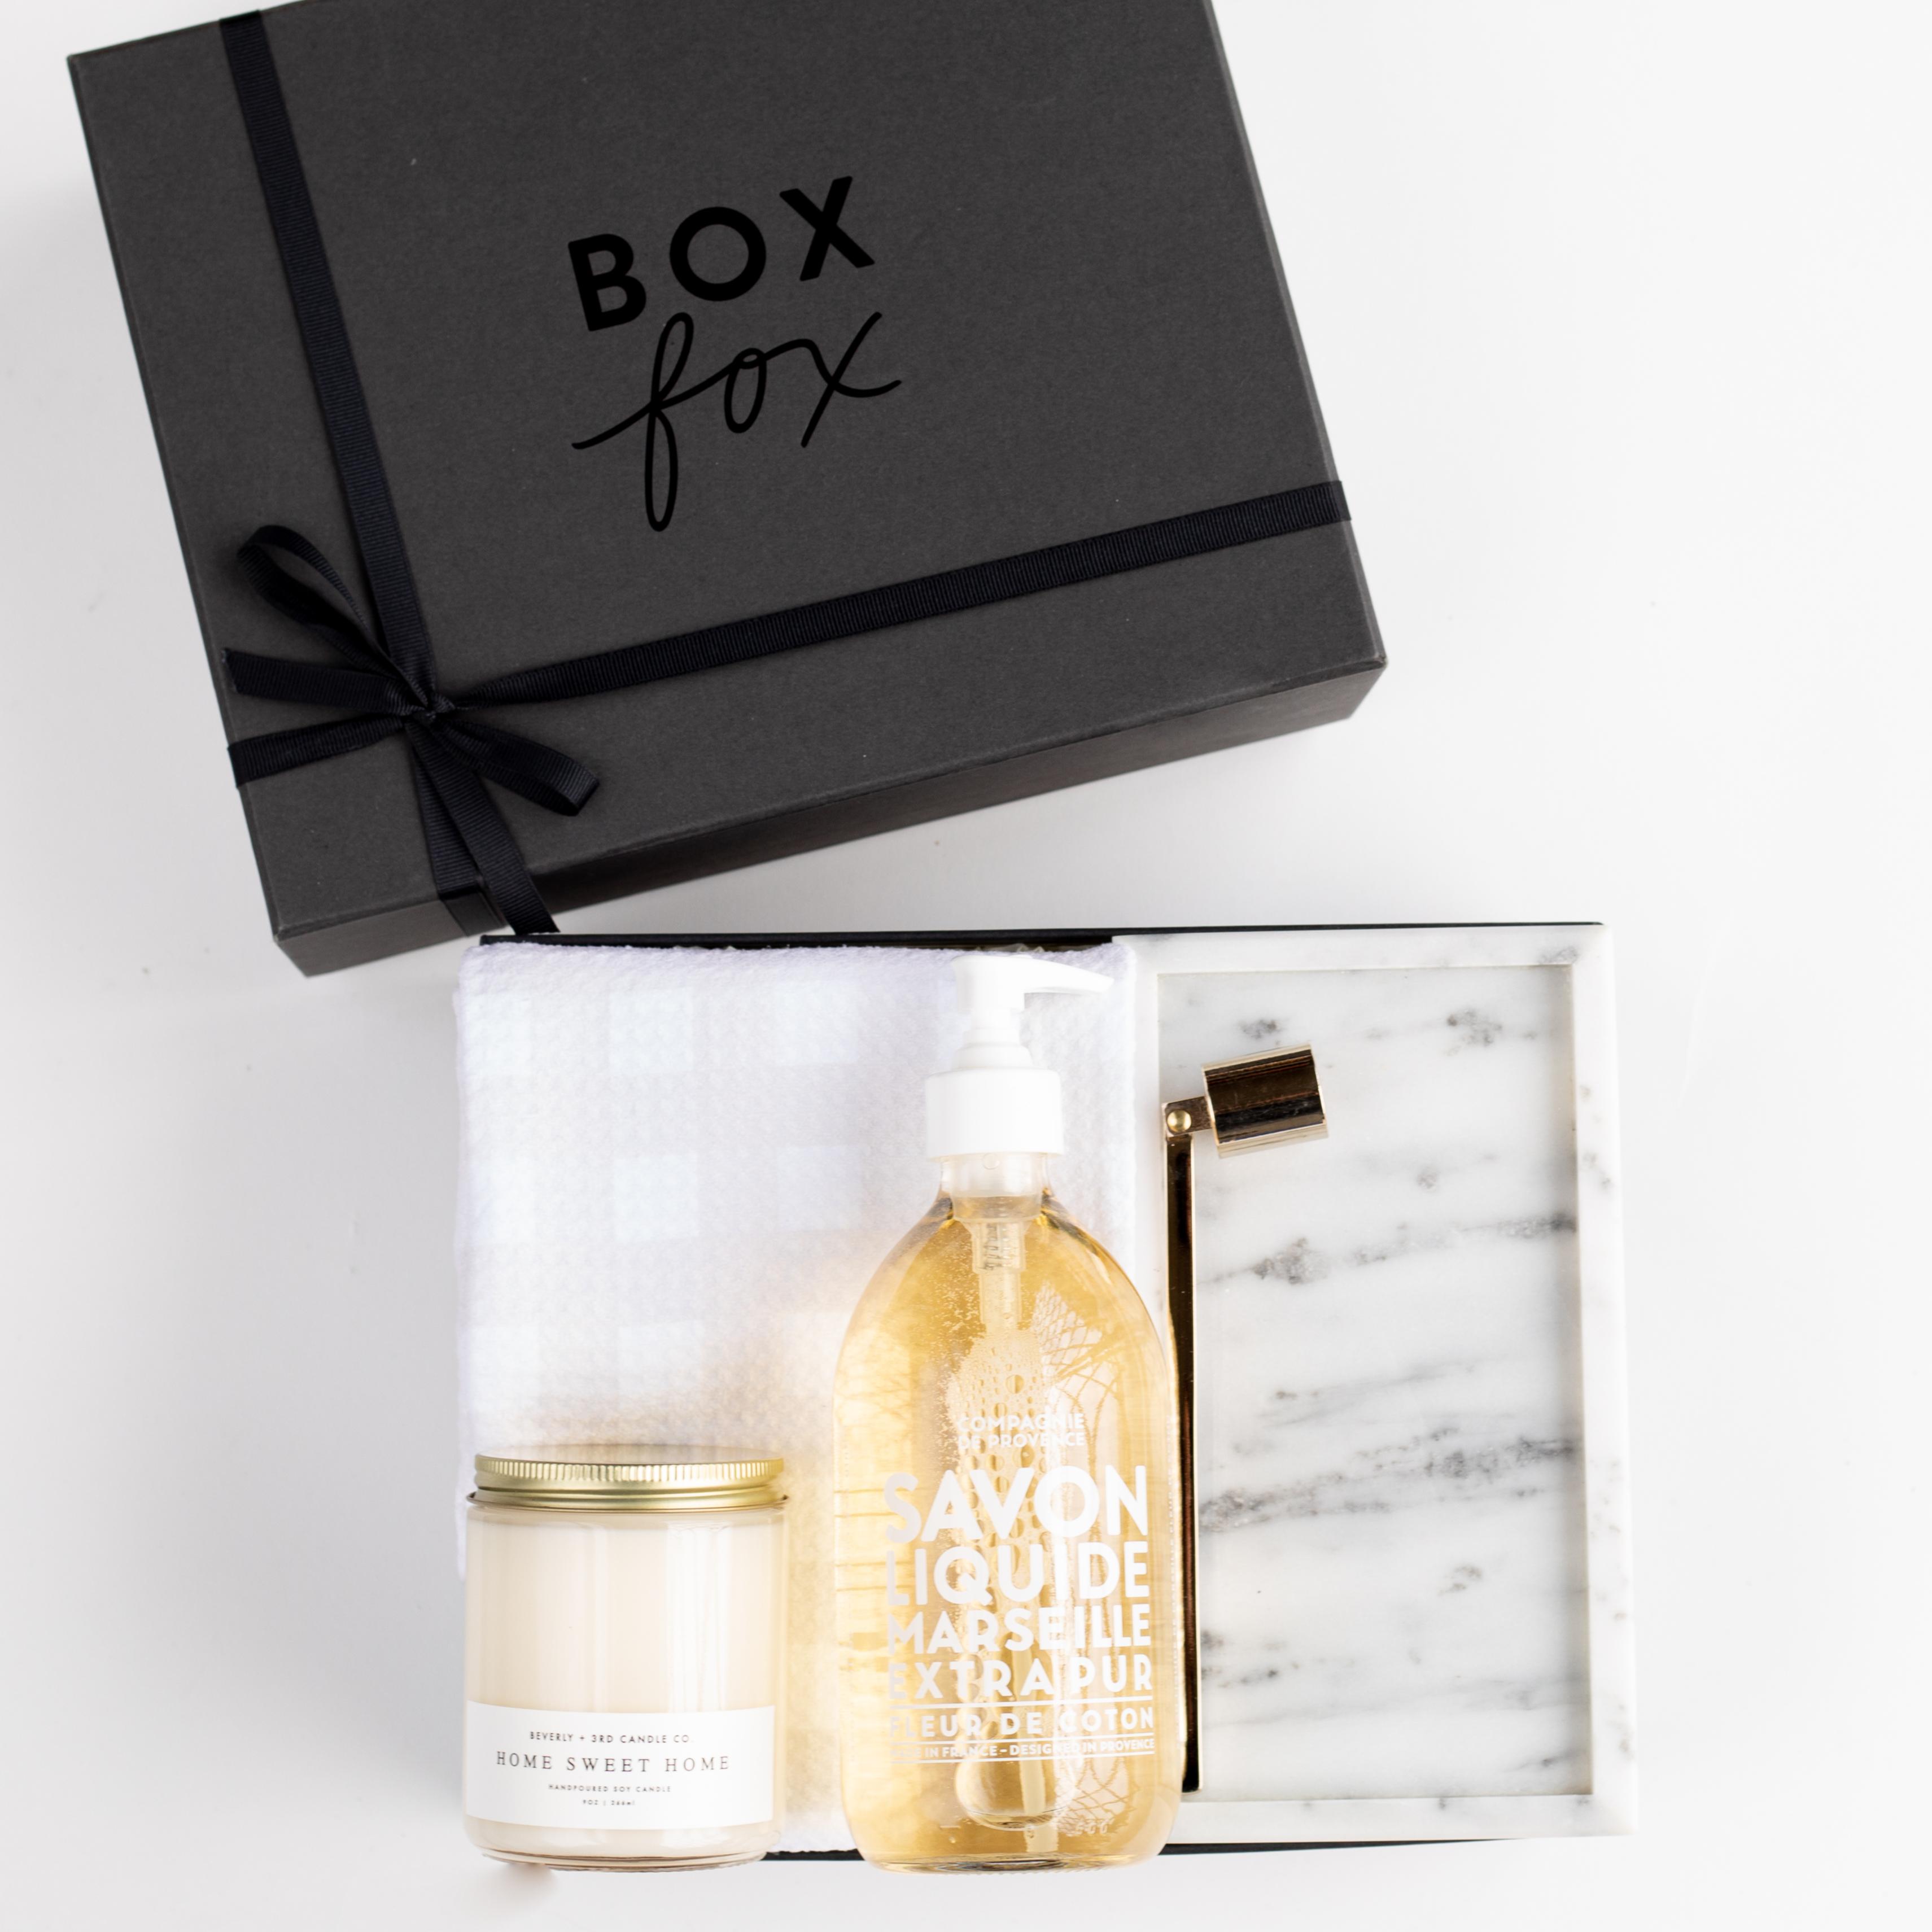 BOXFOX Housewarming gift box also available in Matte Black.